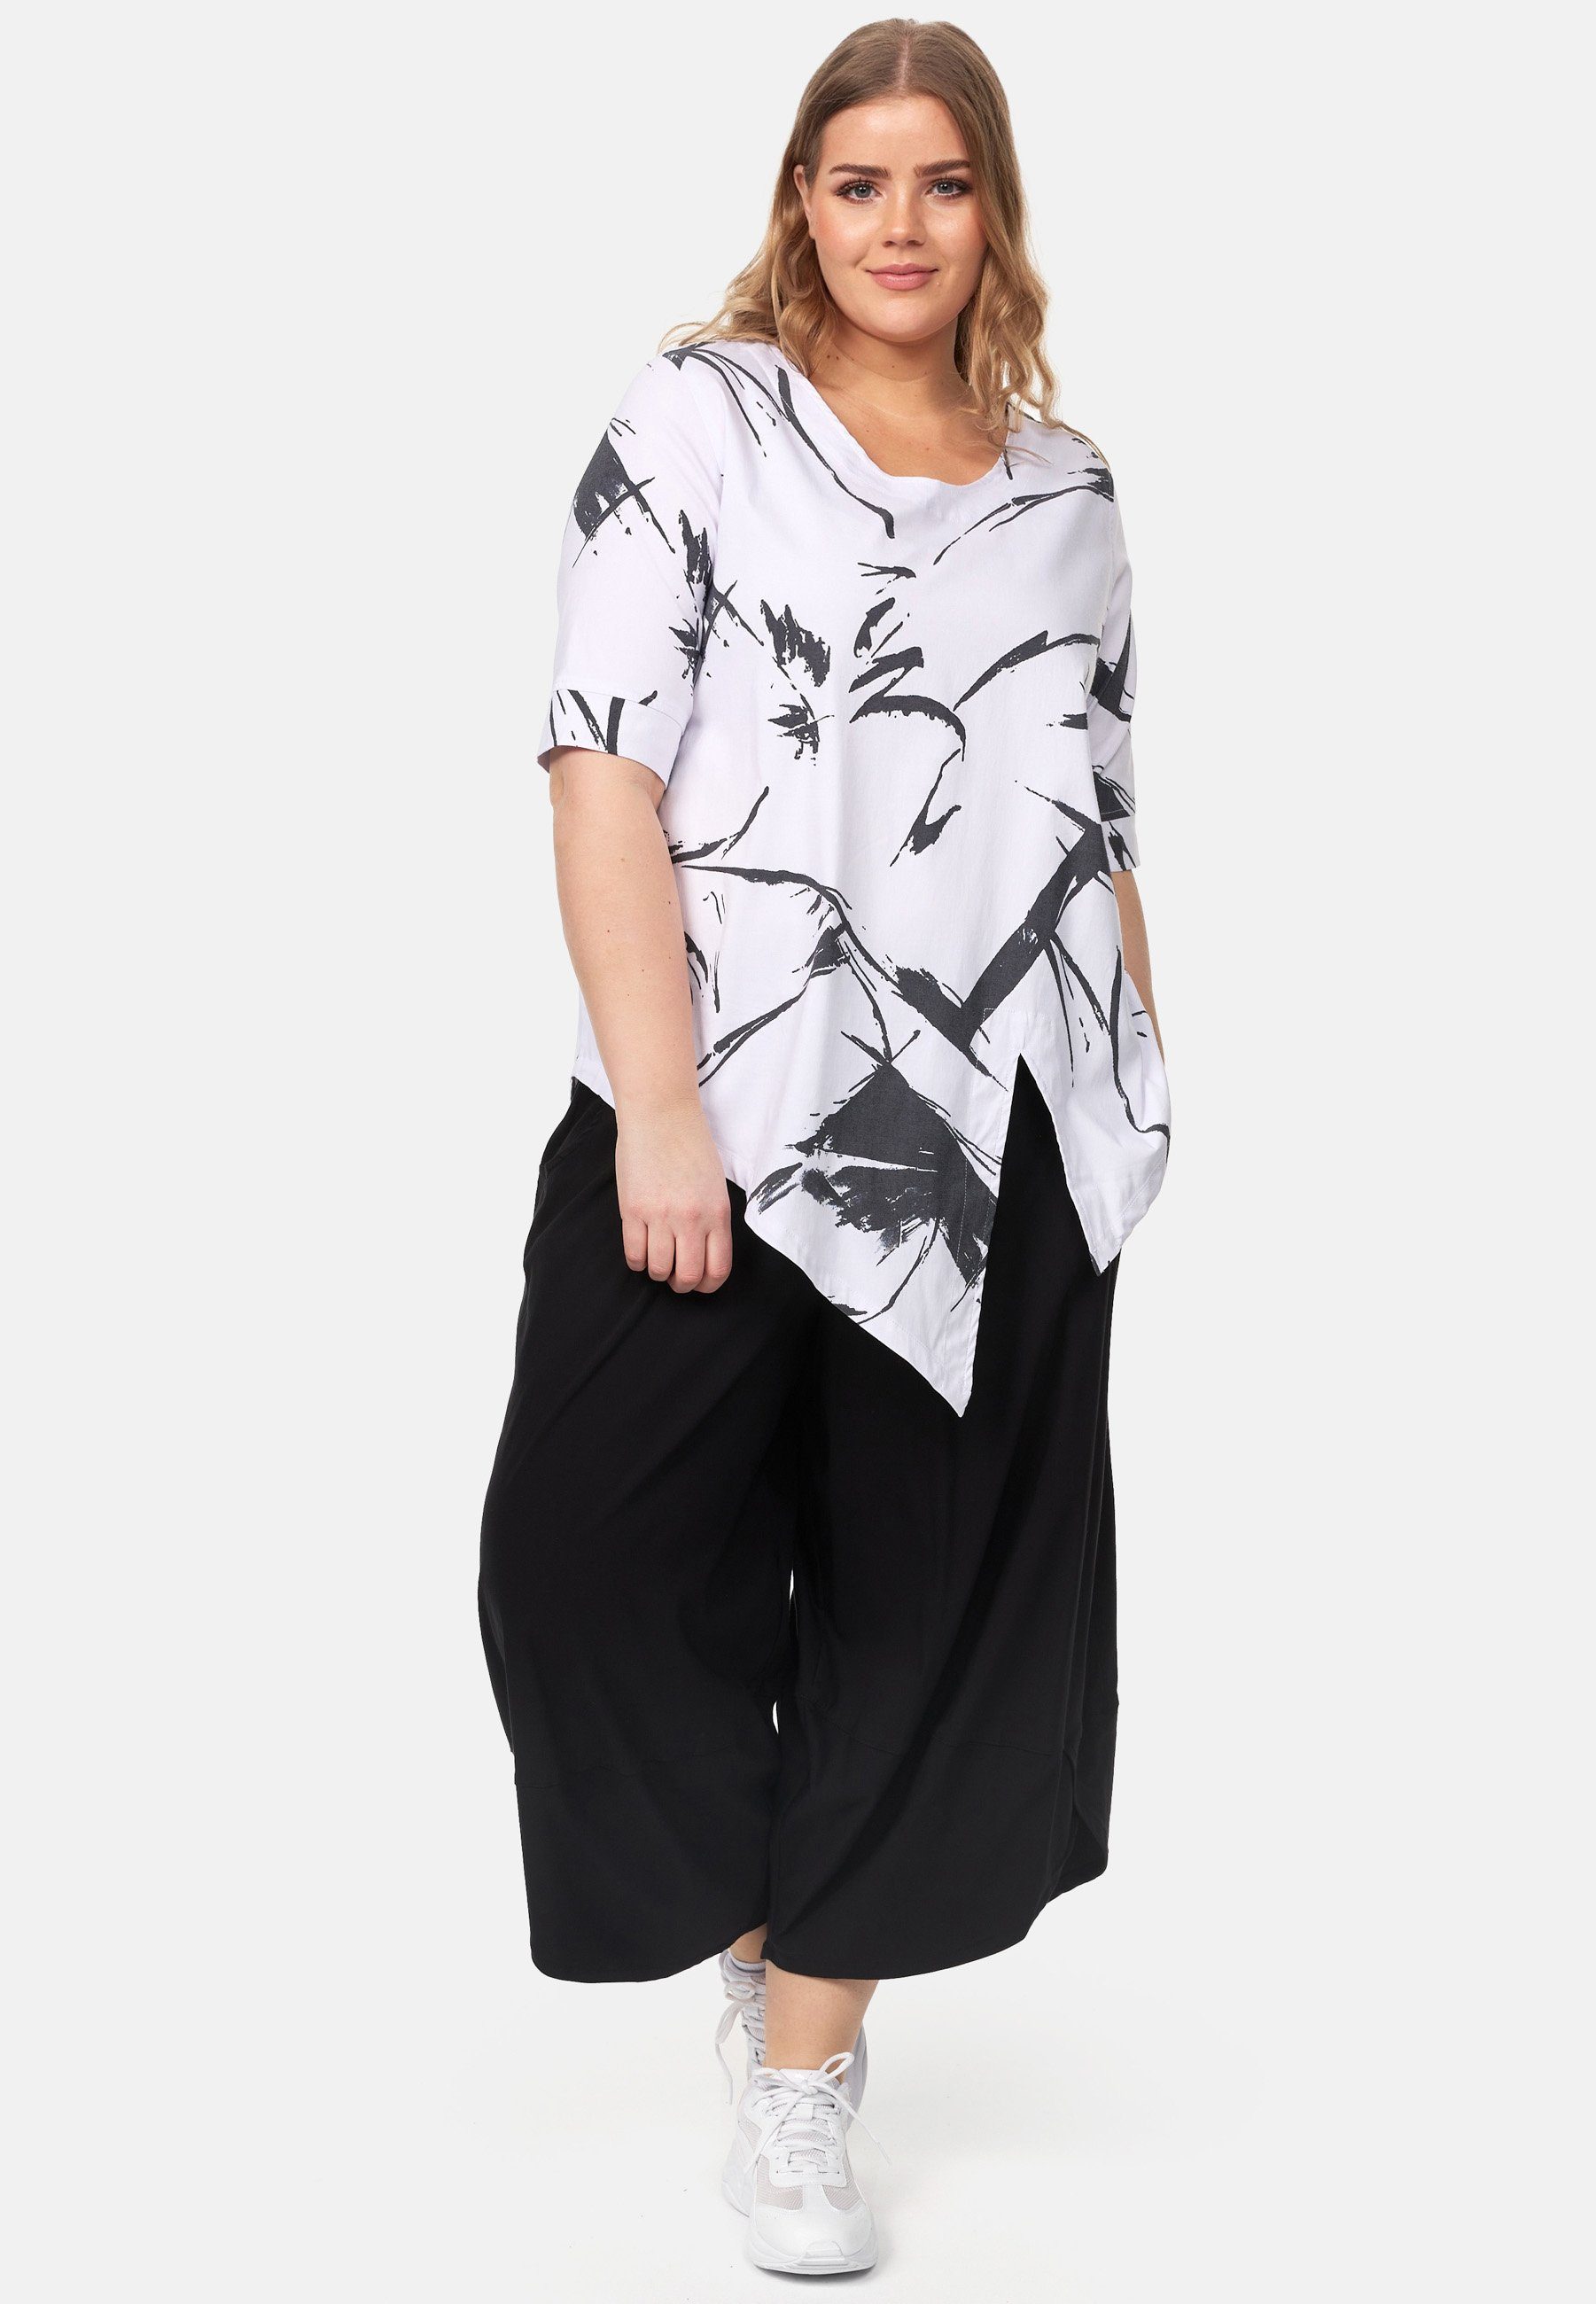 Kekoo Tunikashirt Tunika Shirt A-Line Weiß in mit Saum 'Flora' Muster asymmetrischem